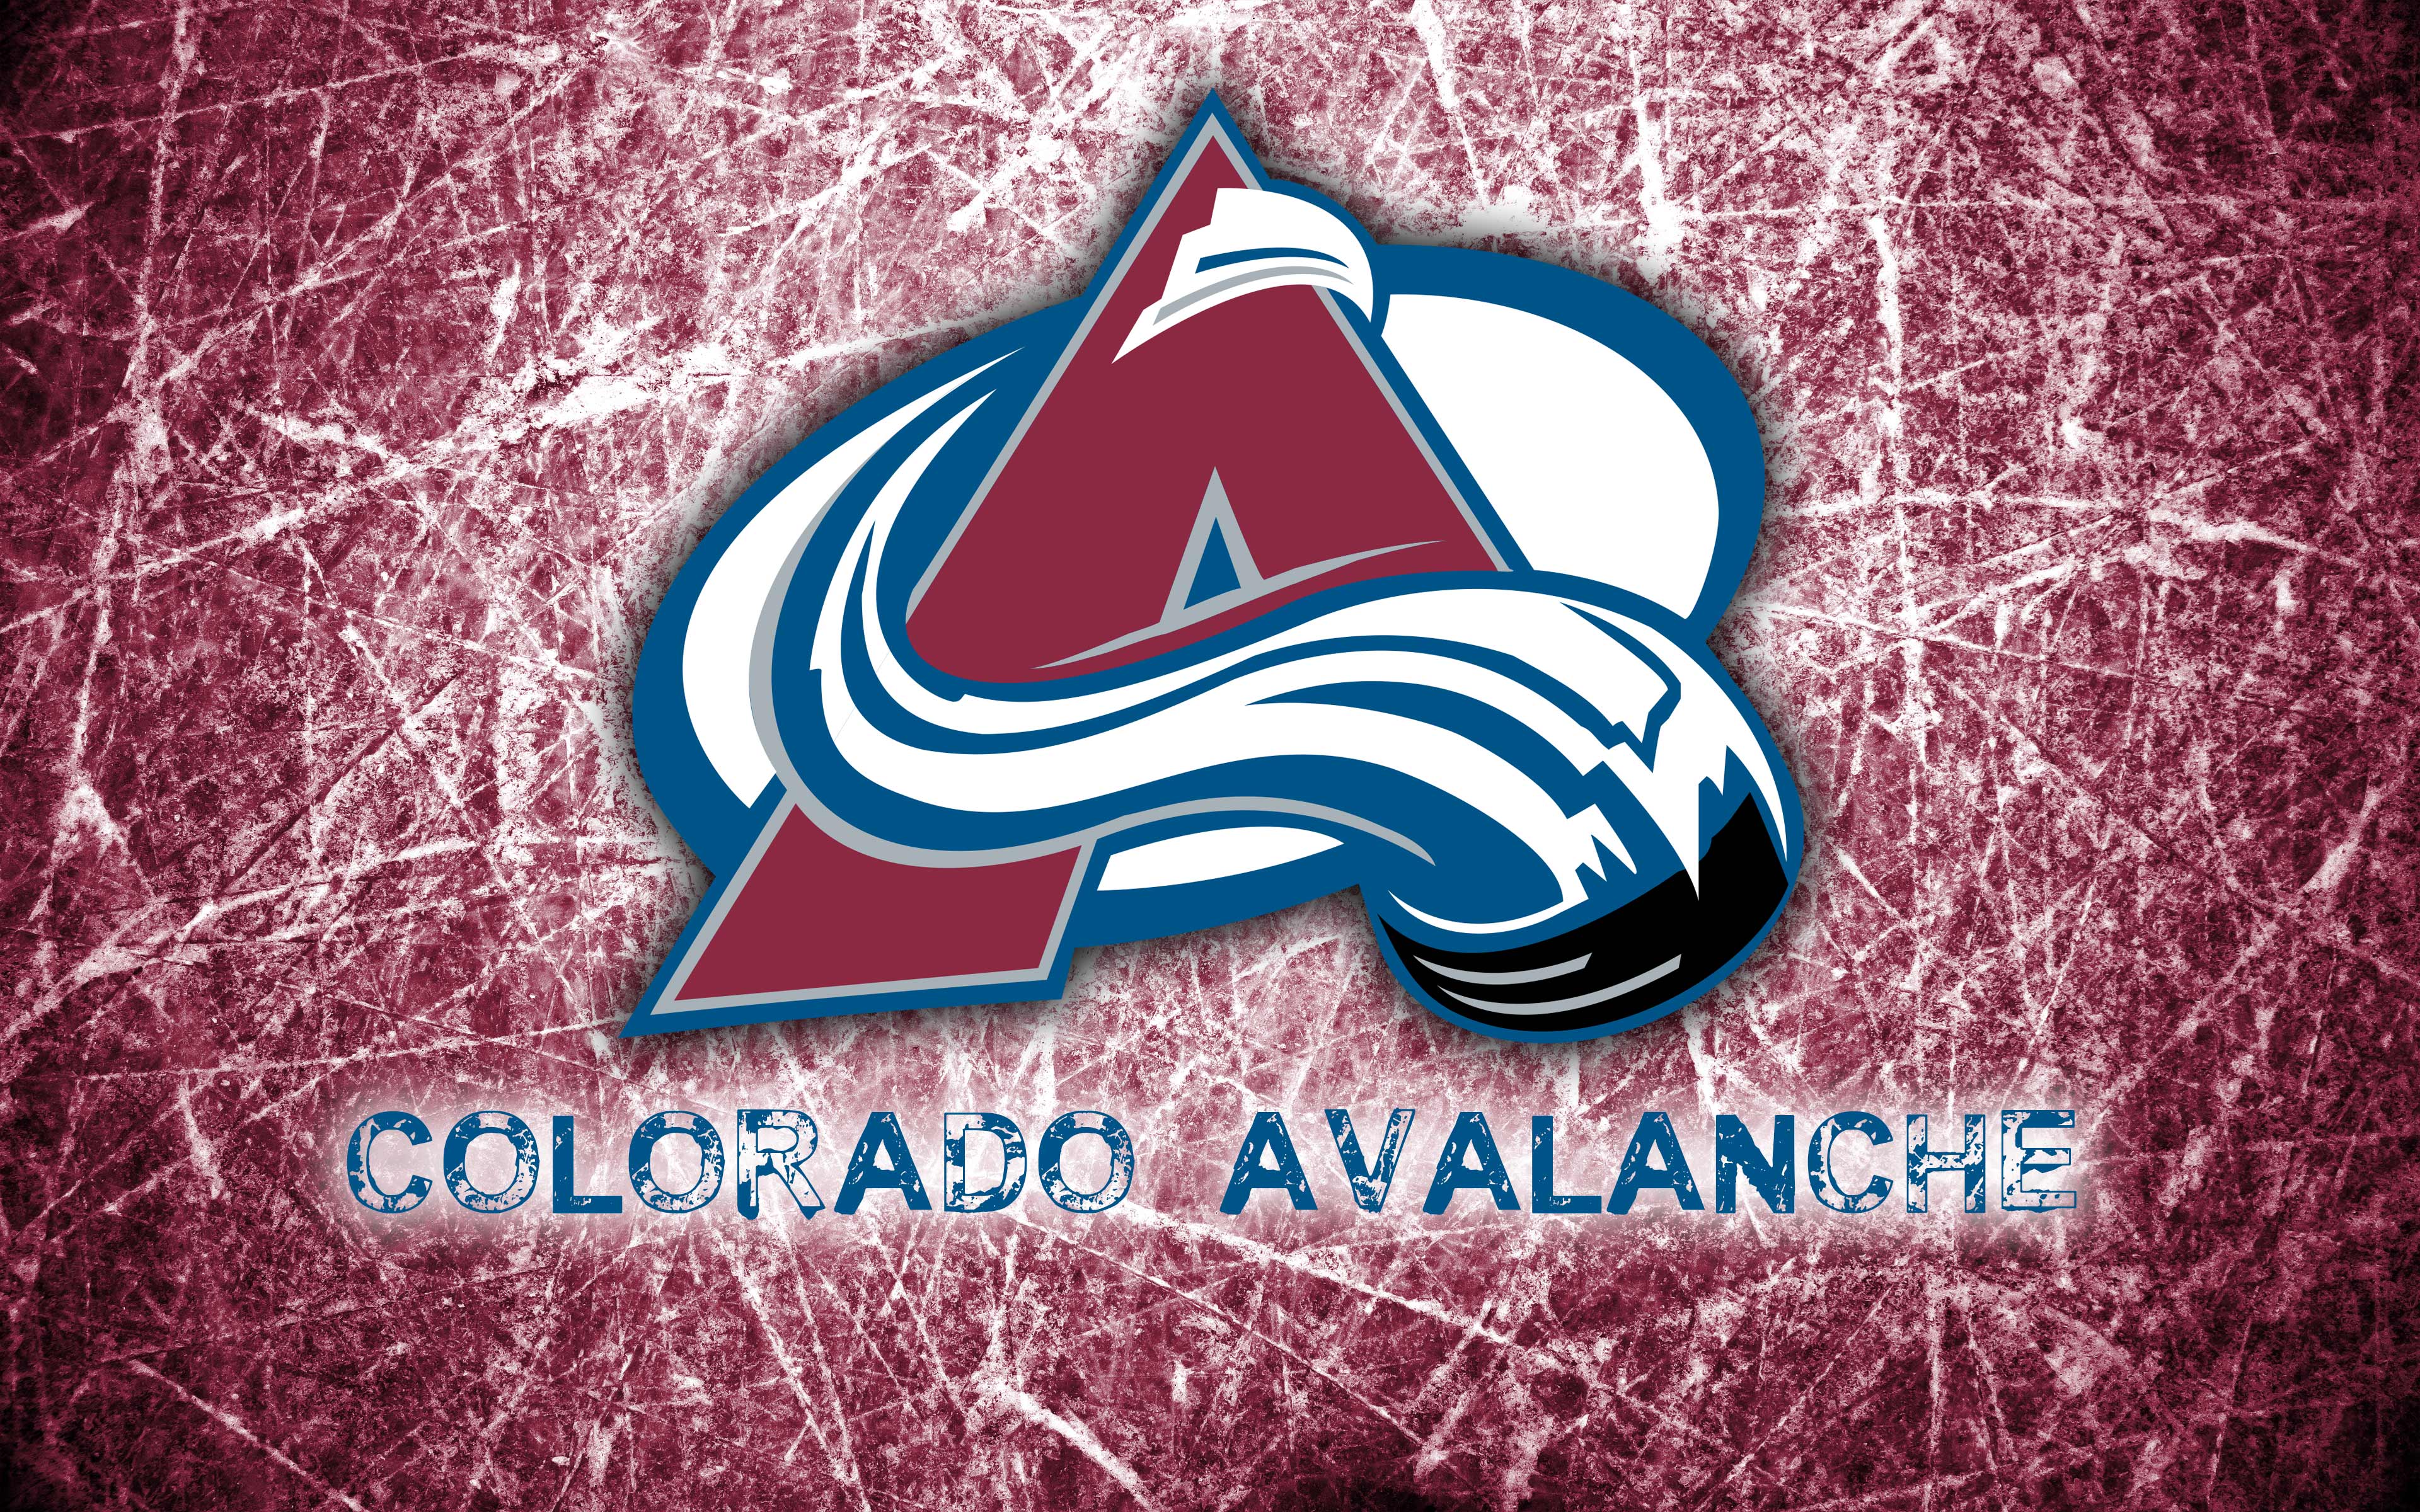 Colorado avalanche 1080P, 2K, 4K, 5K HD wallpapers free download